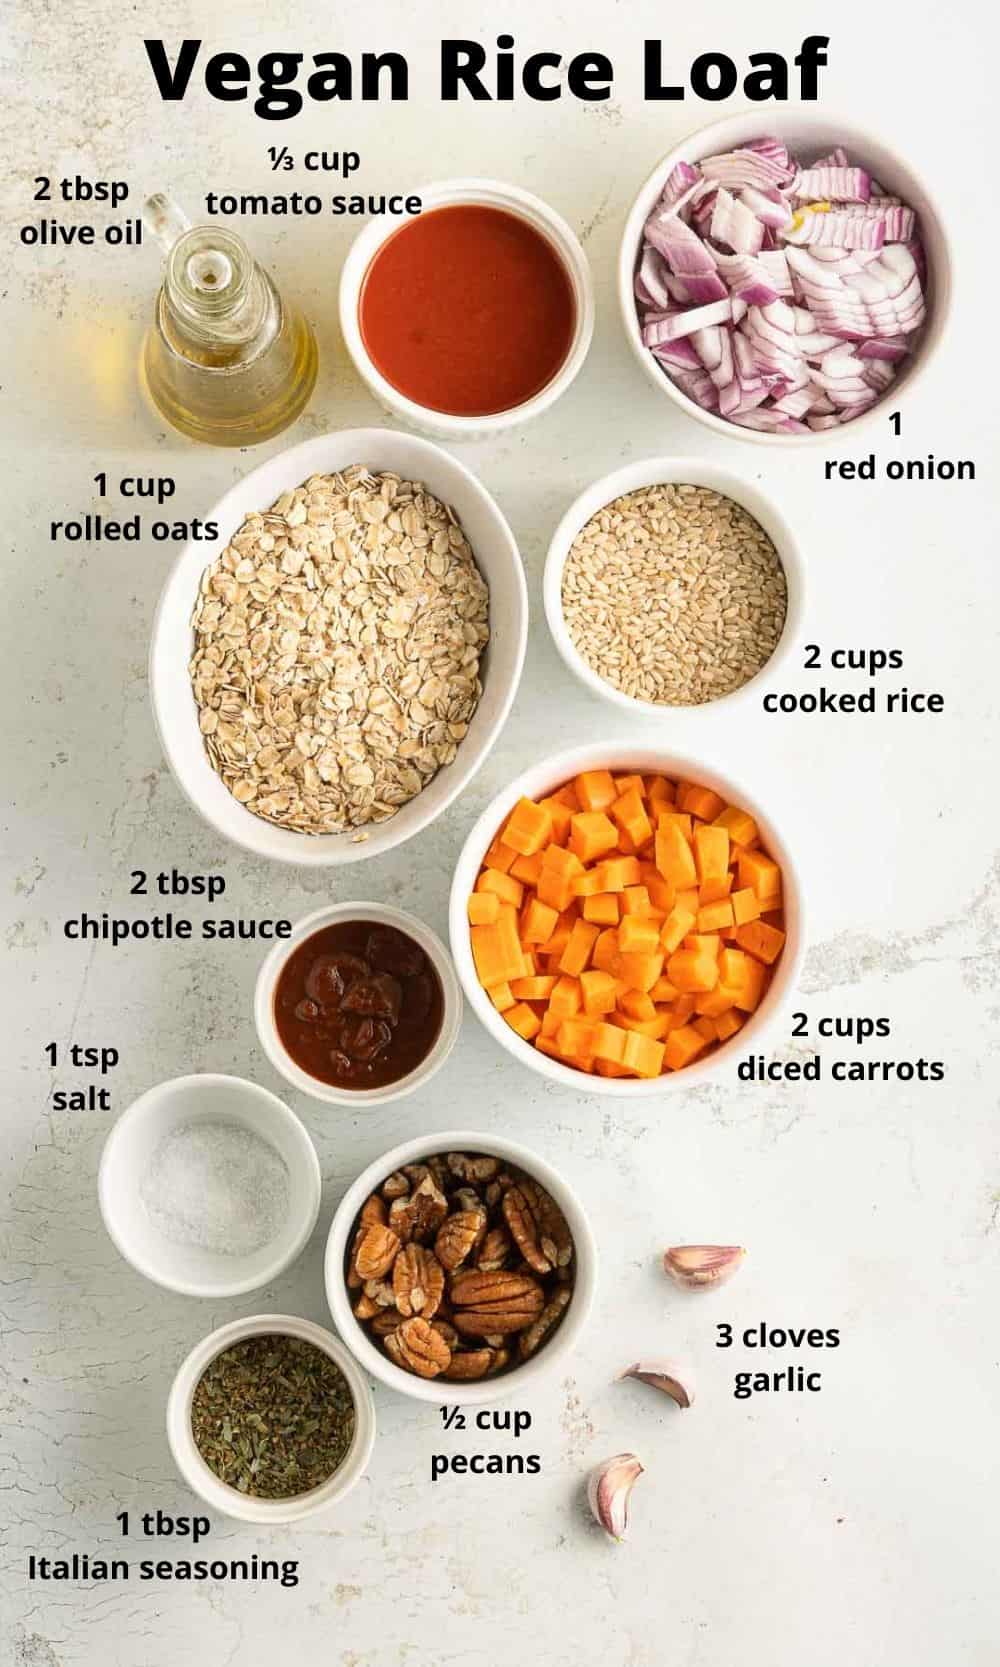 Ingredients for vegan rice loaf